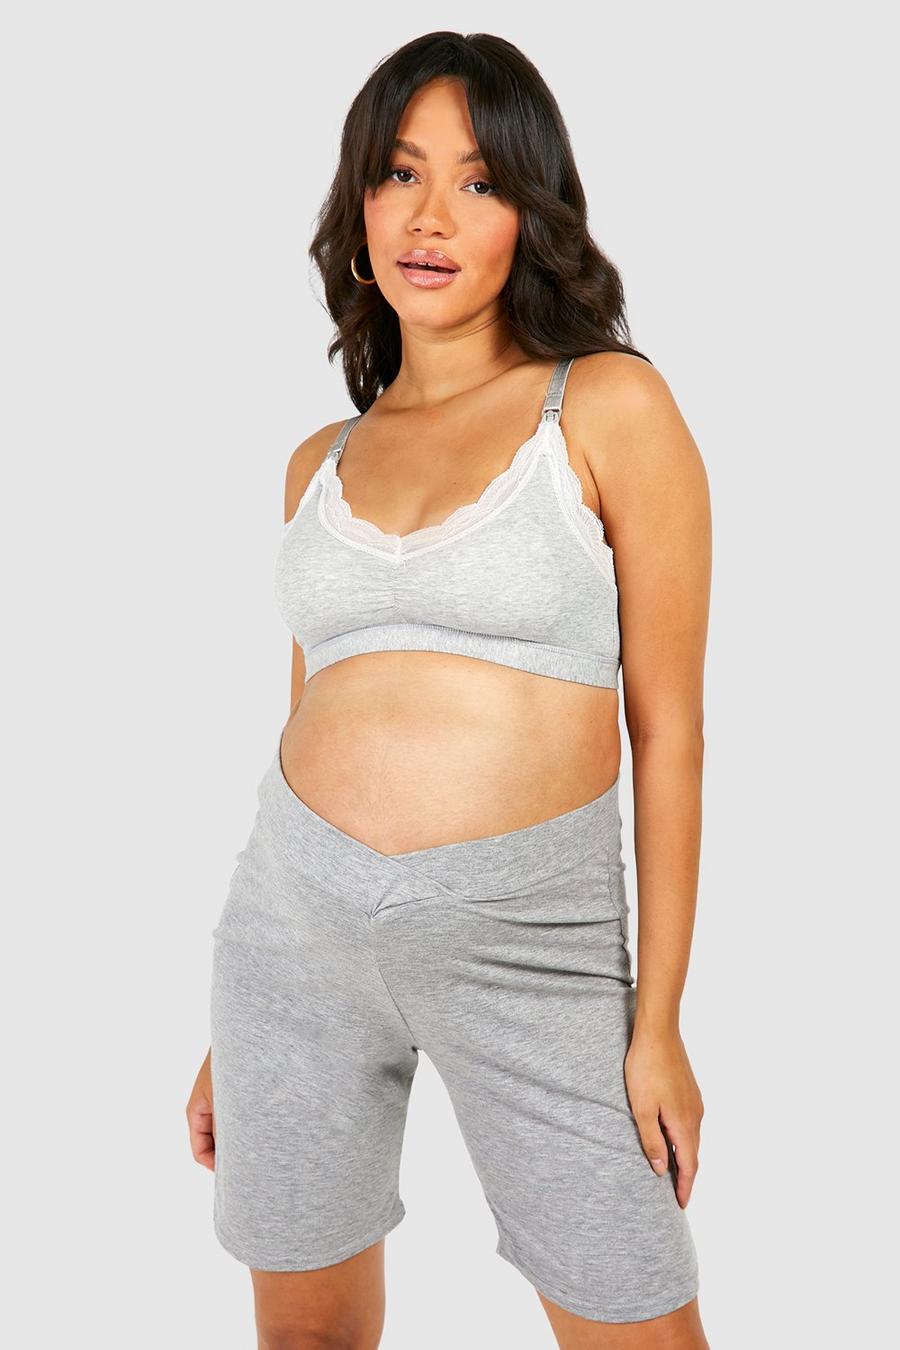 Maternity Lingerie, Maternity Underwear